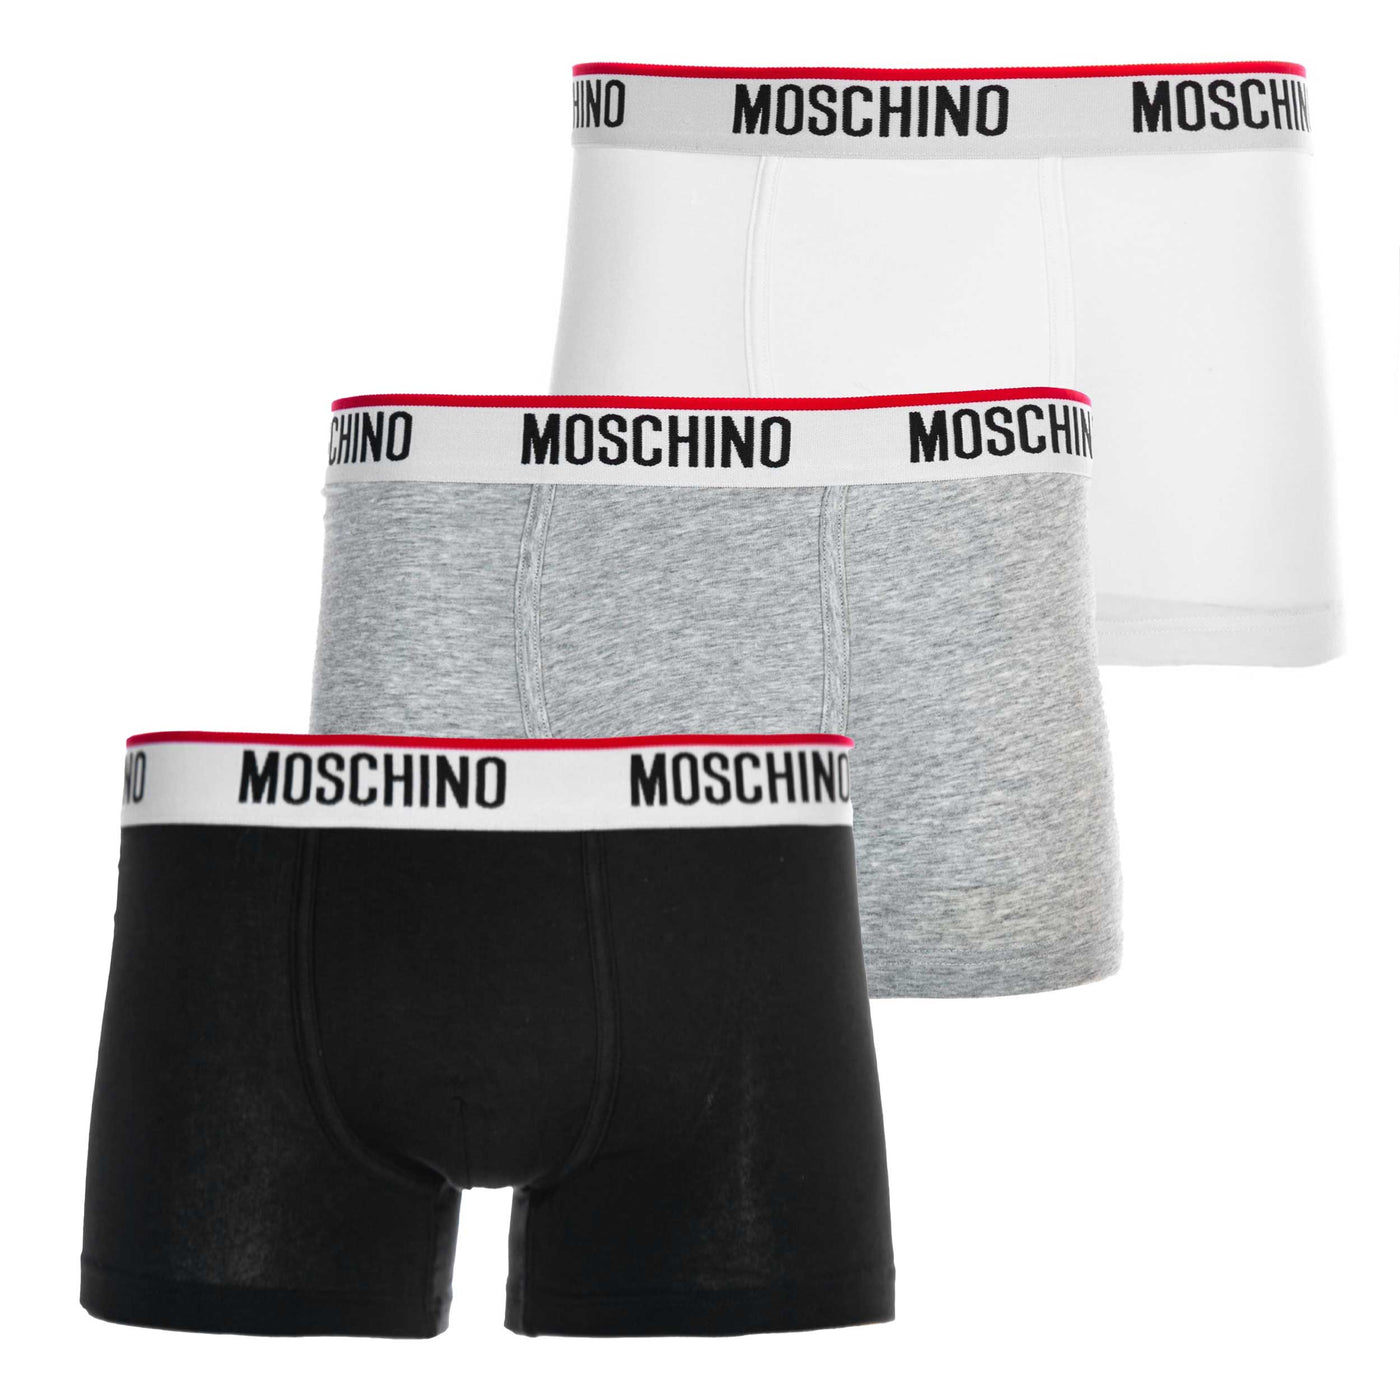 Moschino Underwear Tri Pack Boxers in Black, White & Grey